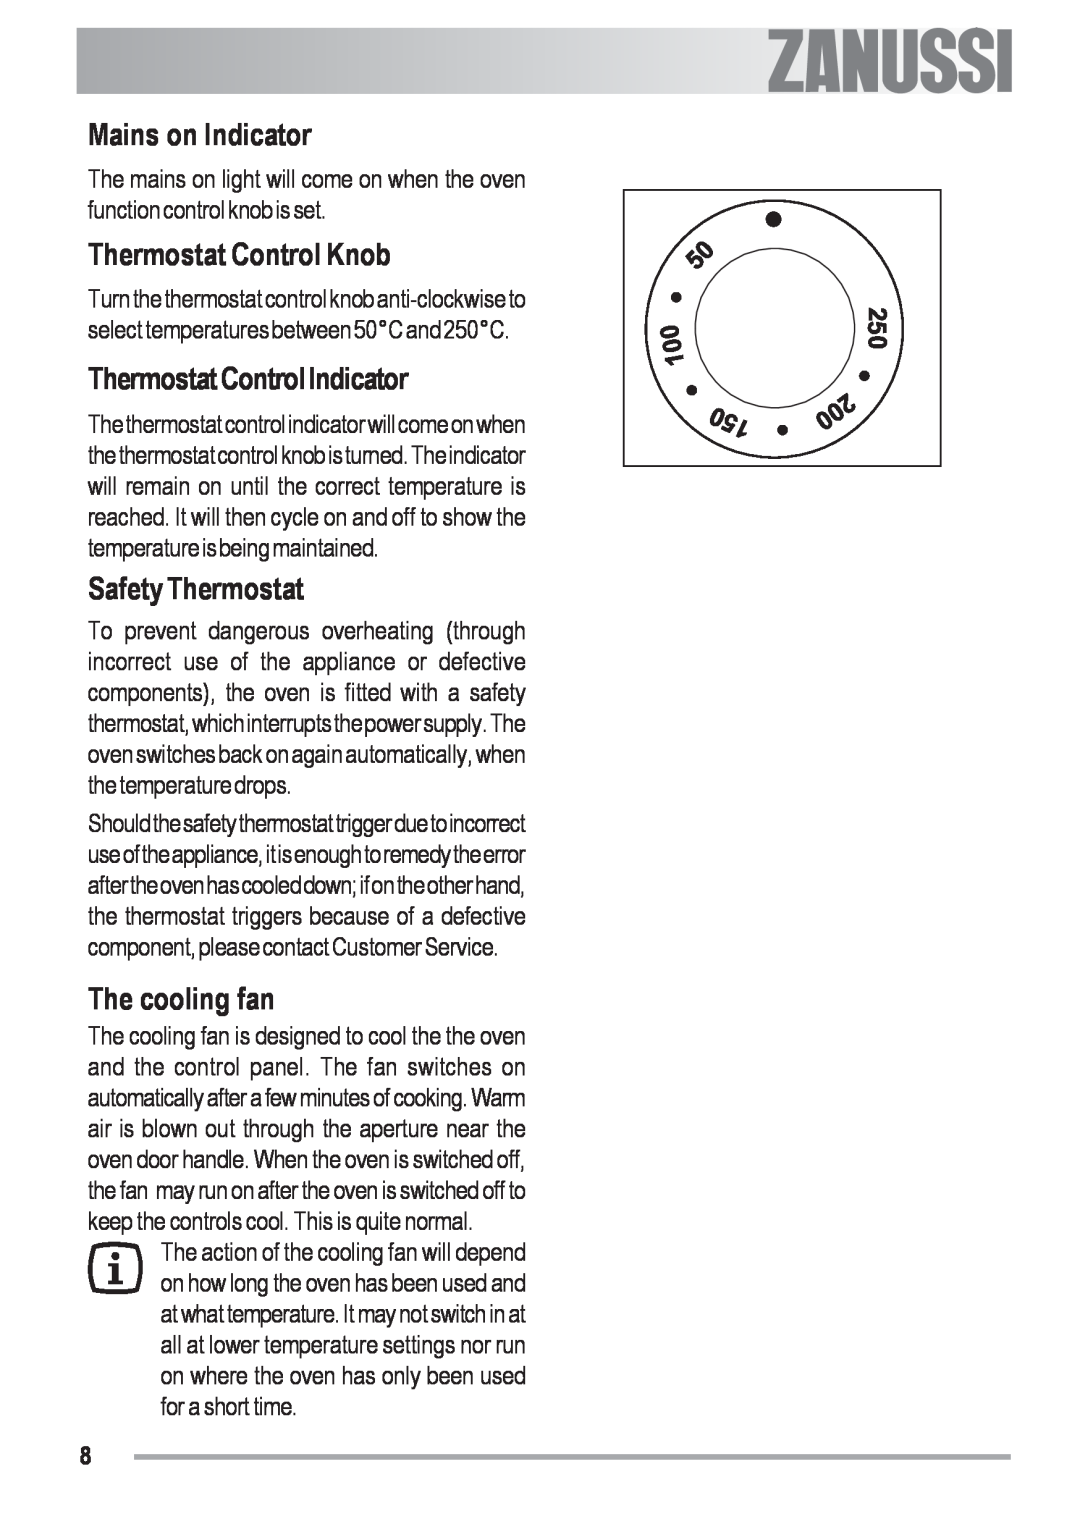 Zanussi ZOU 481 Mains on Indicator, Thermostat Control Knob, Thermostat Control Indicator, Safety Thermostat, electrolux 